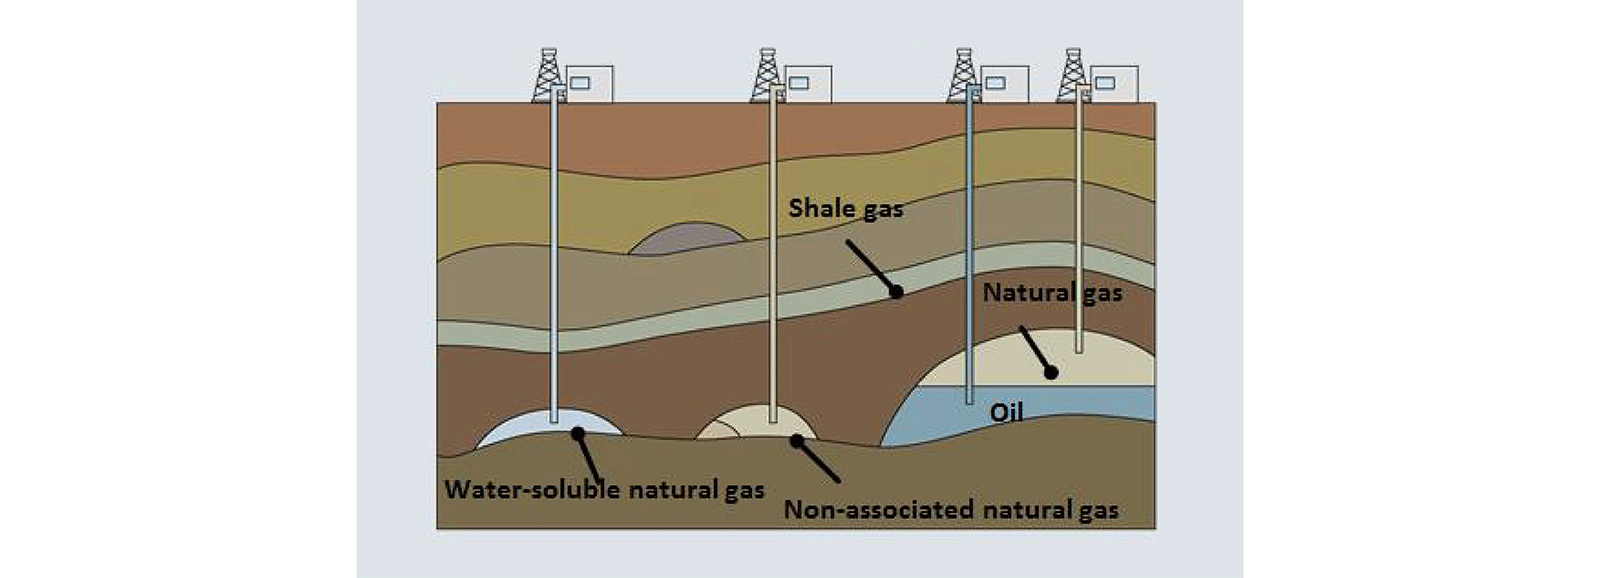 Utvinning av konvensjonell naturgass